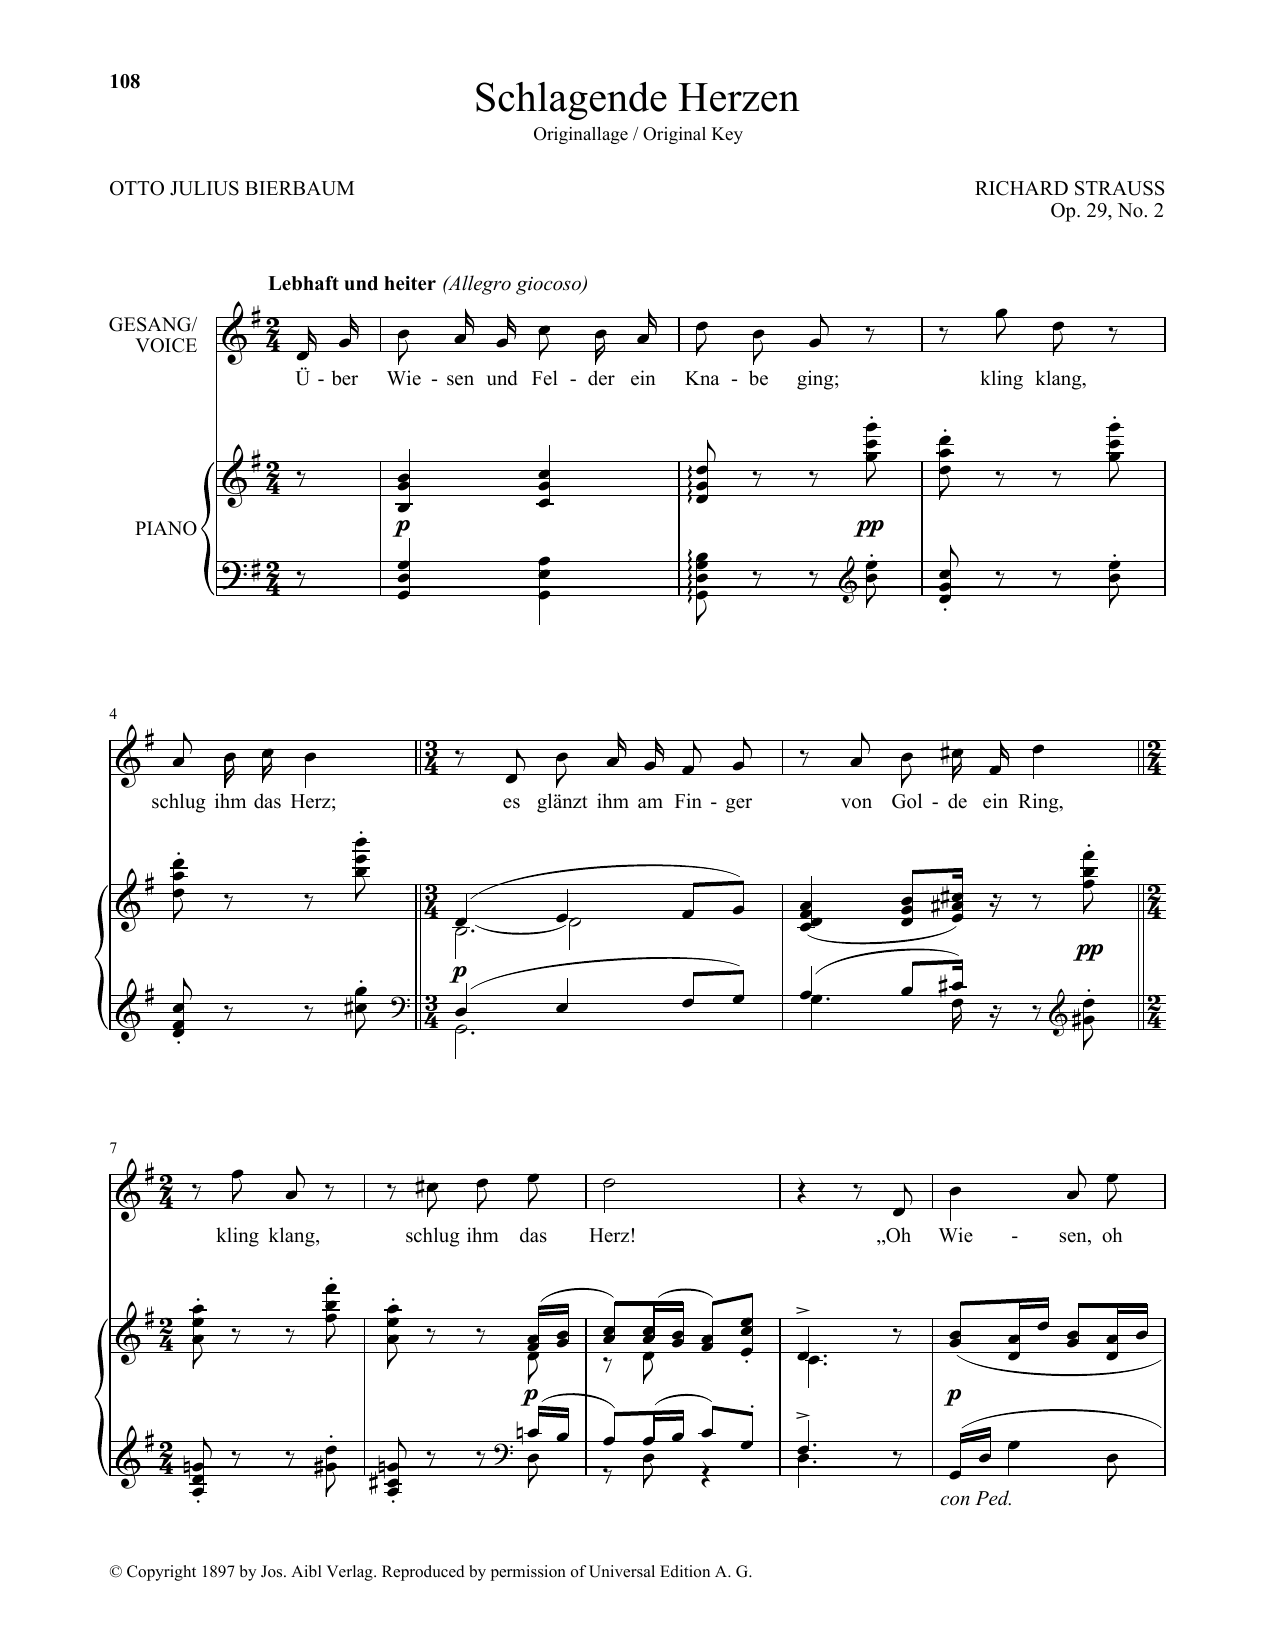 Richard Strauss Schlagende Herzen (High Voice) Sheet Music Notes & Chords for Piano & Vocal - Download or Print PDF